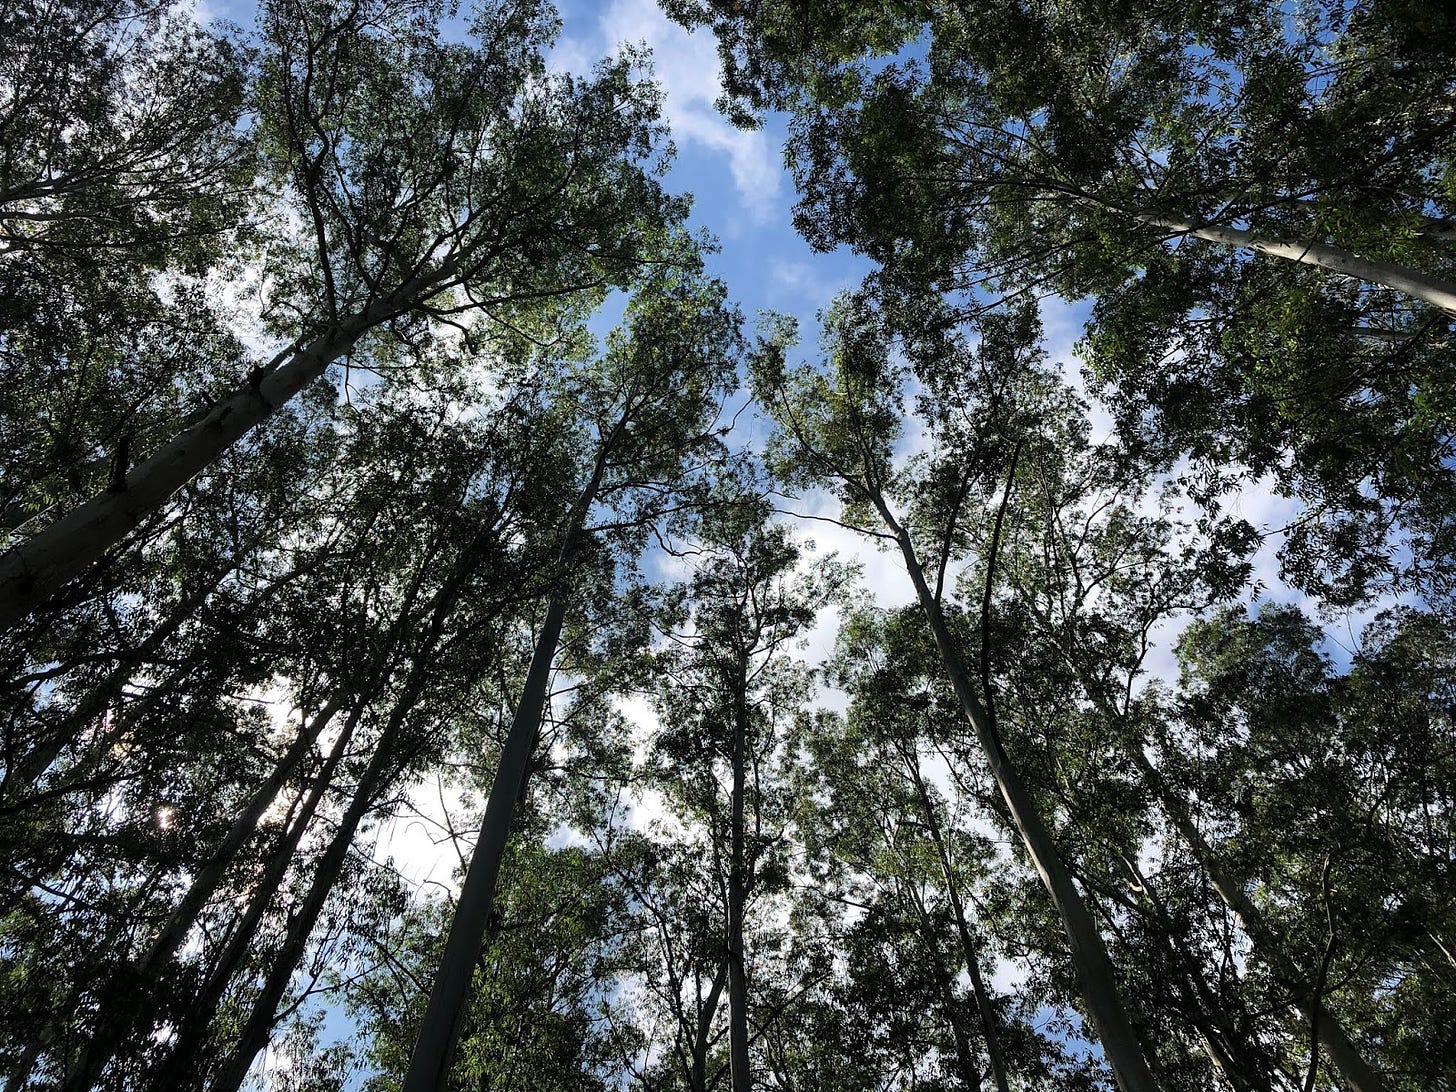 Pine forest on the way to Vattavada